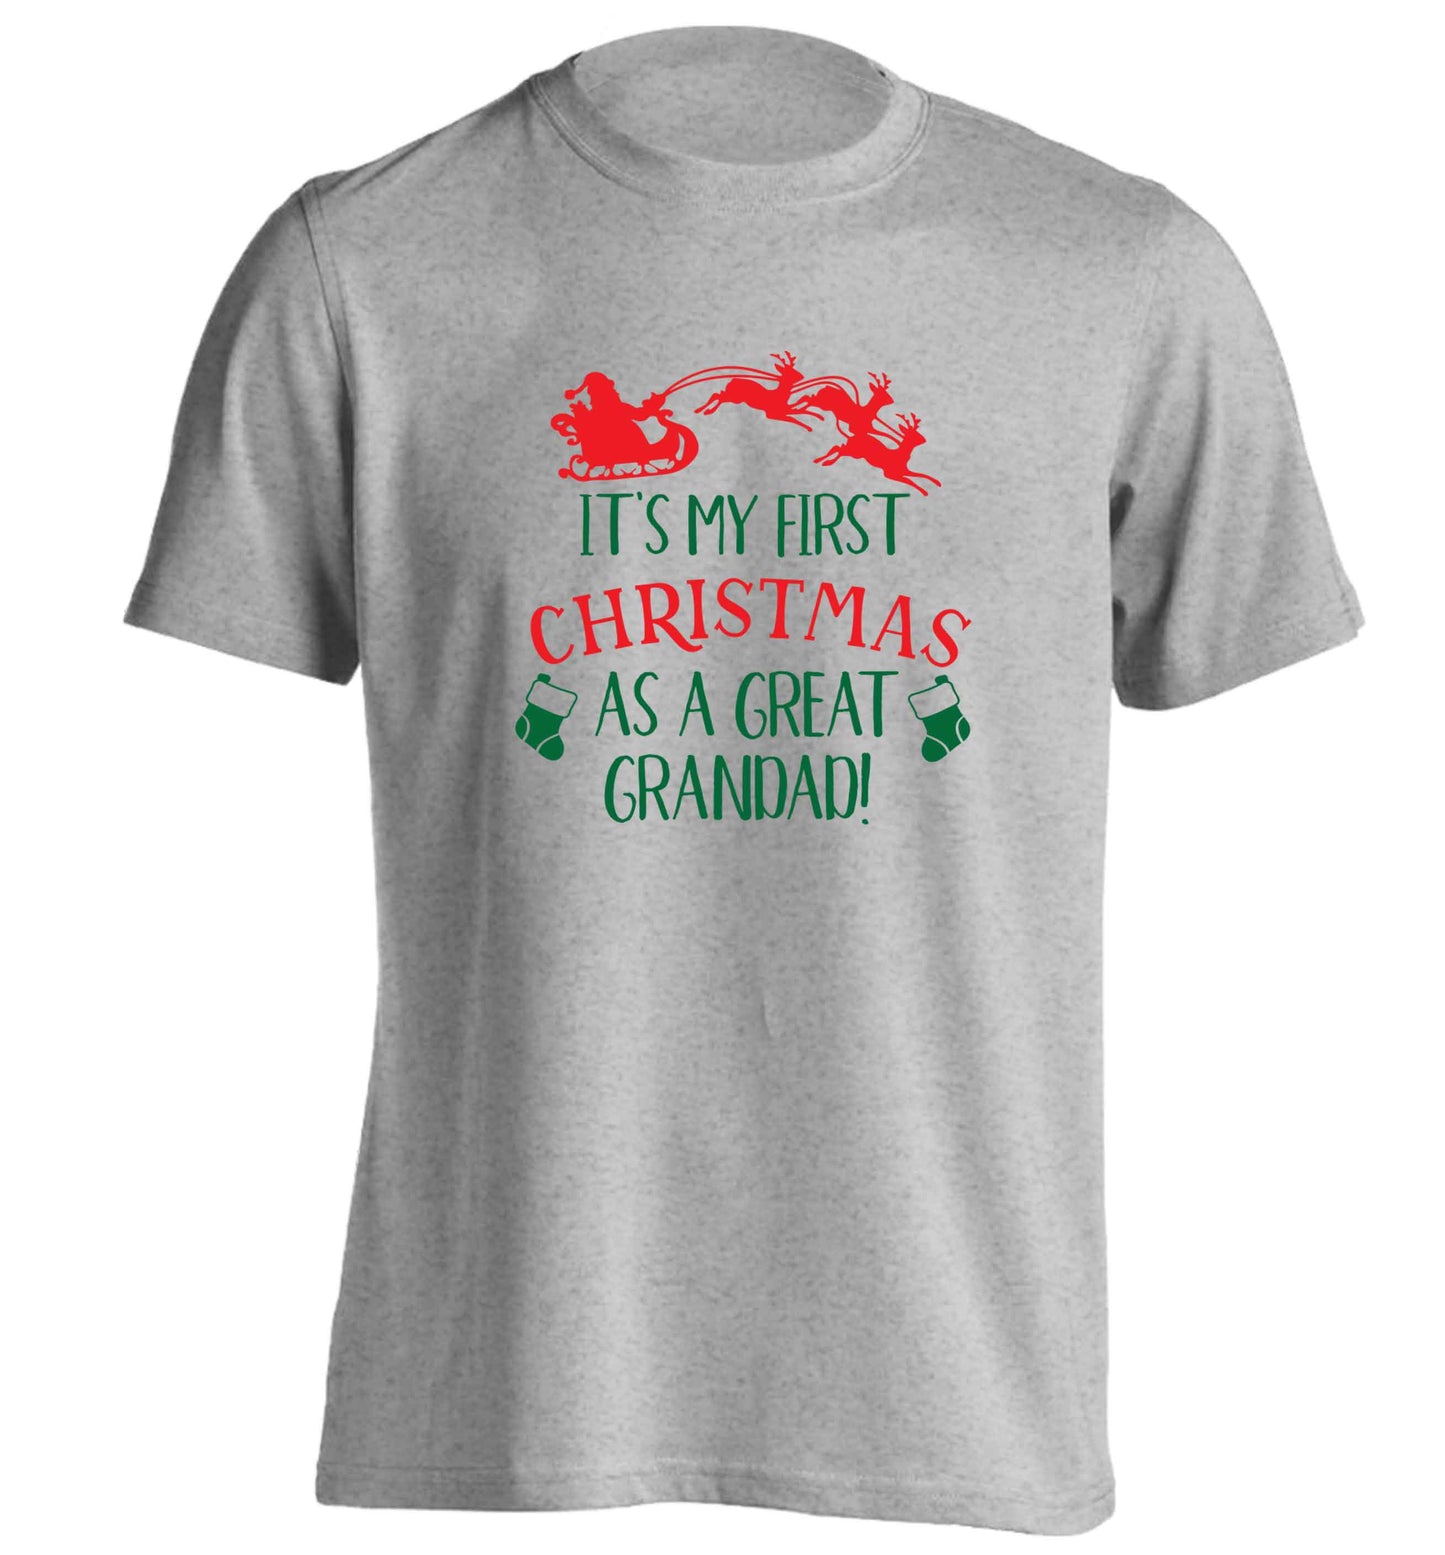 It's my first Christmas as a great grandad! adults unisex grey Tshirt 2XL